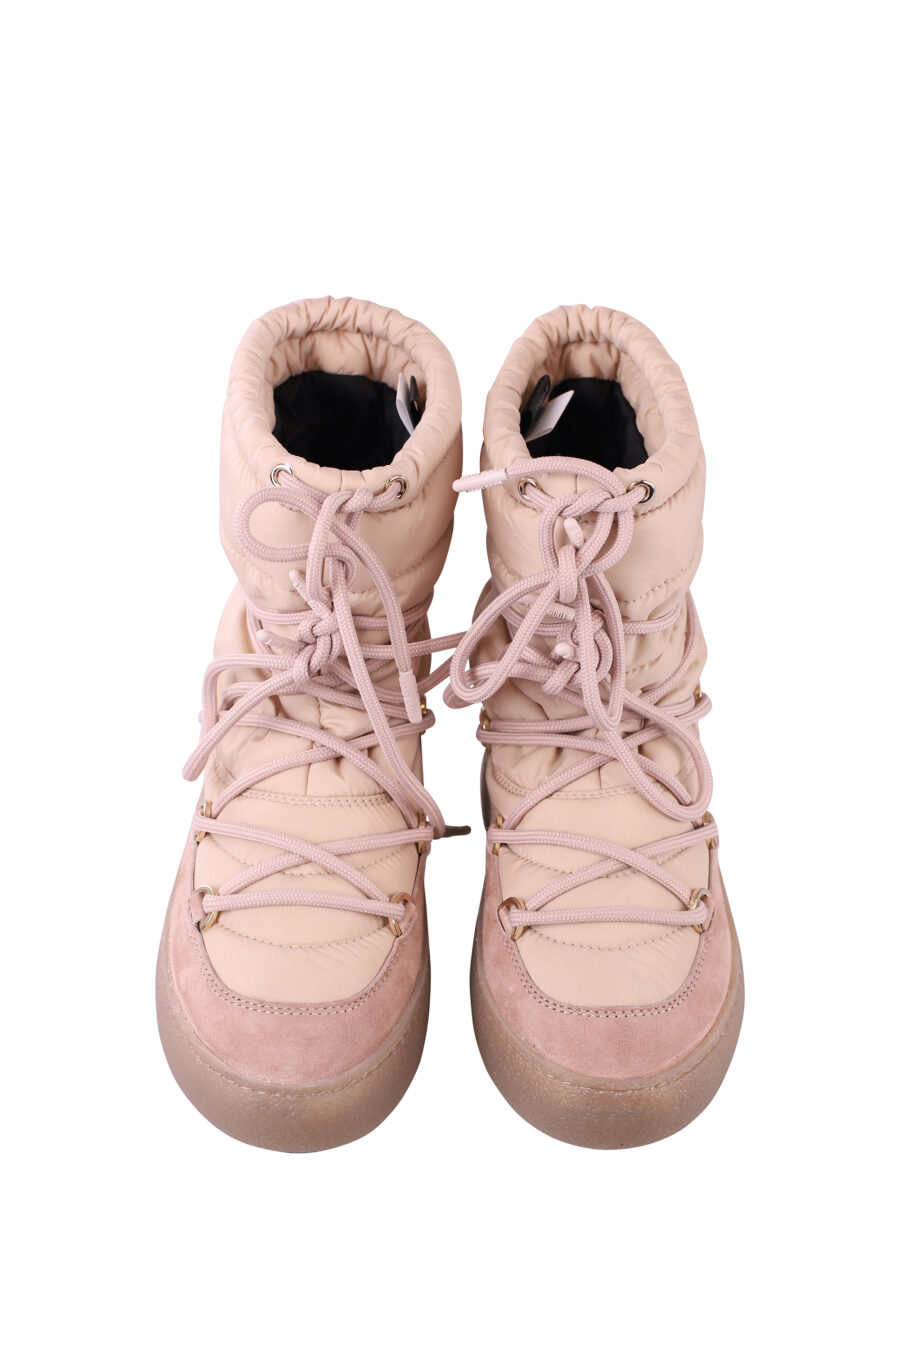 Stiefel "LTRACK" in rosa mit Nylon - IMG 6669